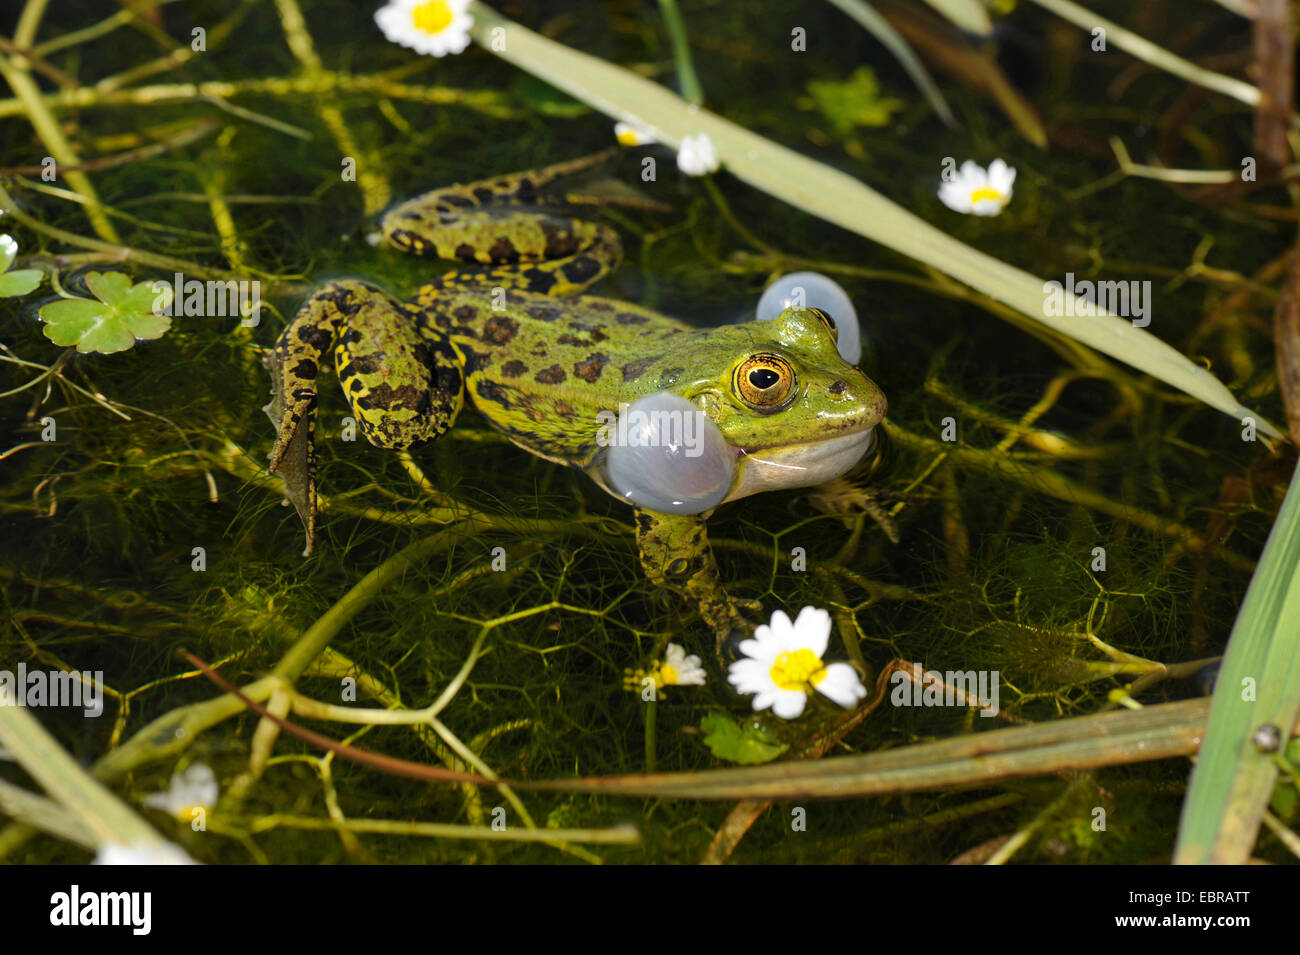 Pool frog, Little waterfrog (Rana lessonae, Pelophylax lessonae, Rana bergeri, Pelophylax bergeri, Pelophylax lessonae bergeri), croaking pool frog in a pond, France, Corsica Stock Photo